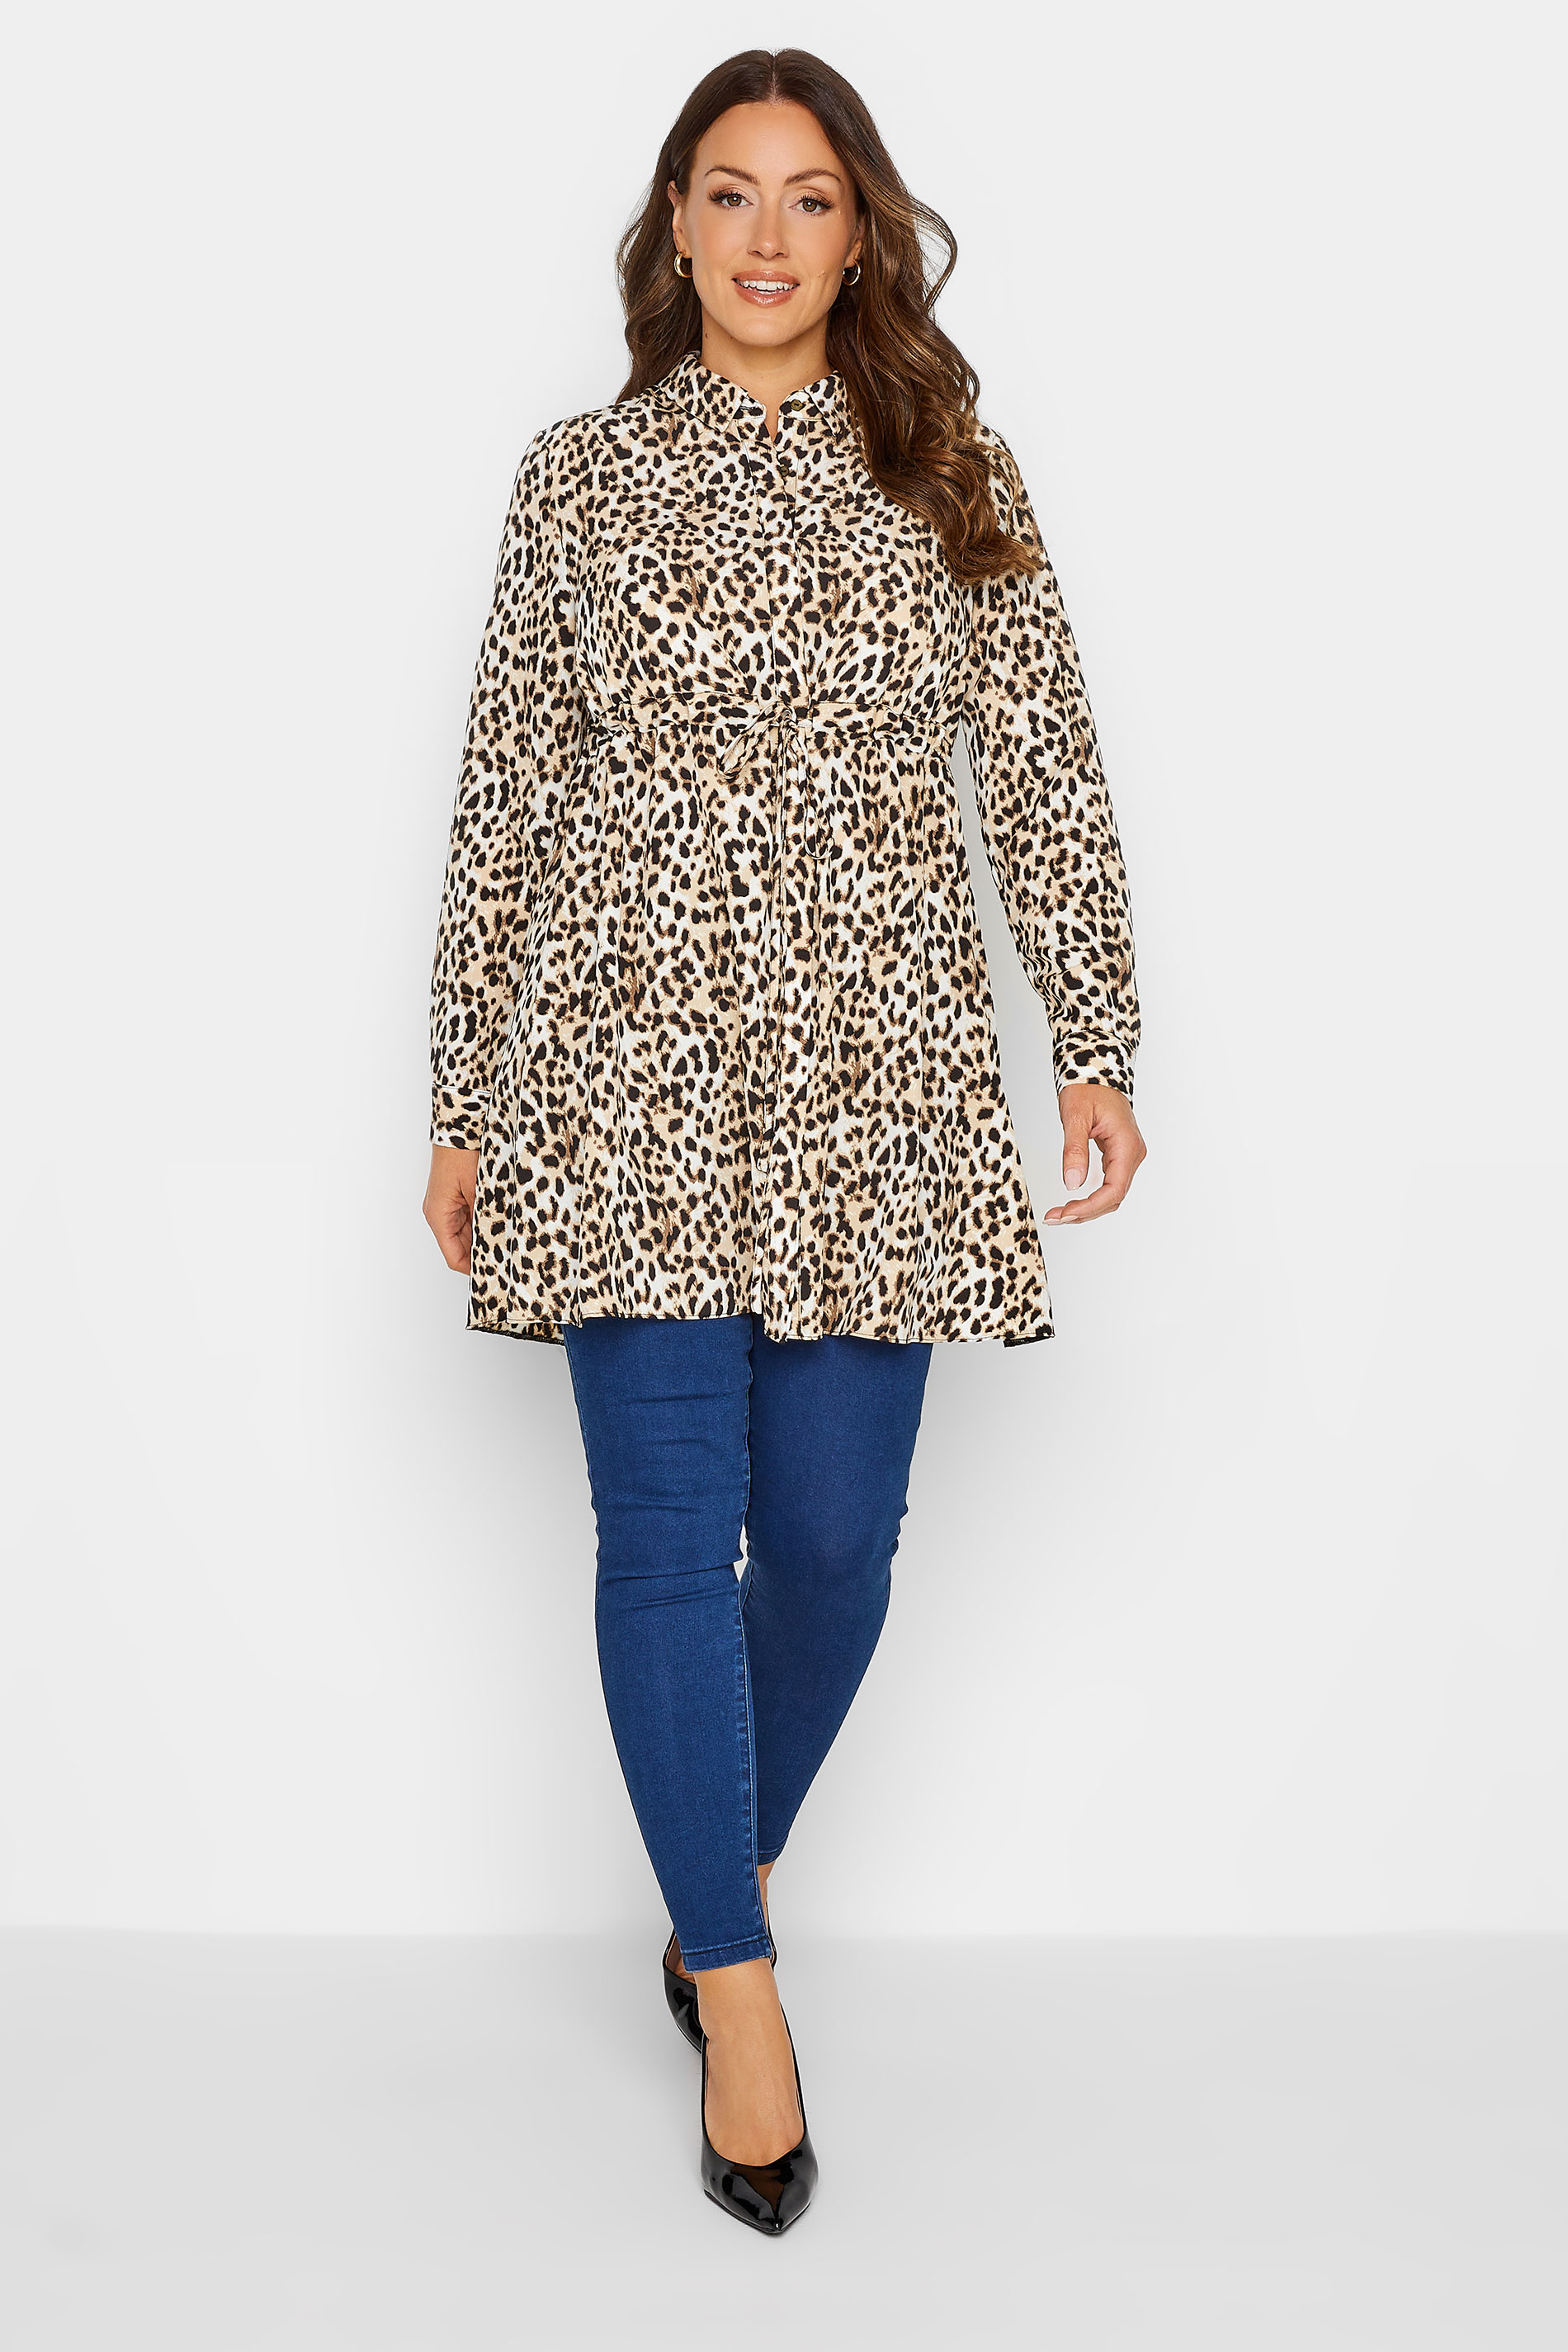 M&Co Brown Leopard Print Tie Waist Tunic Shirt | M&Co 1